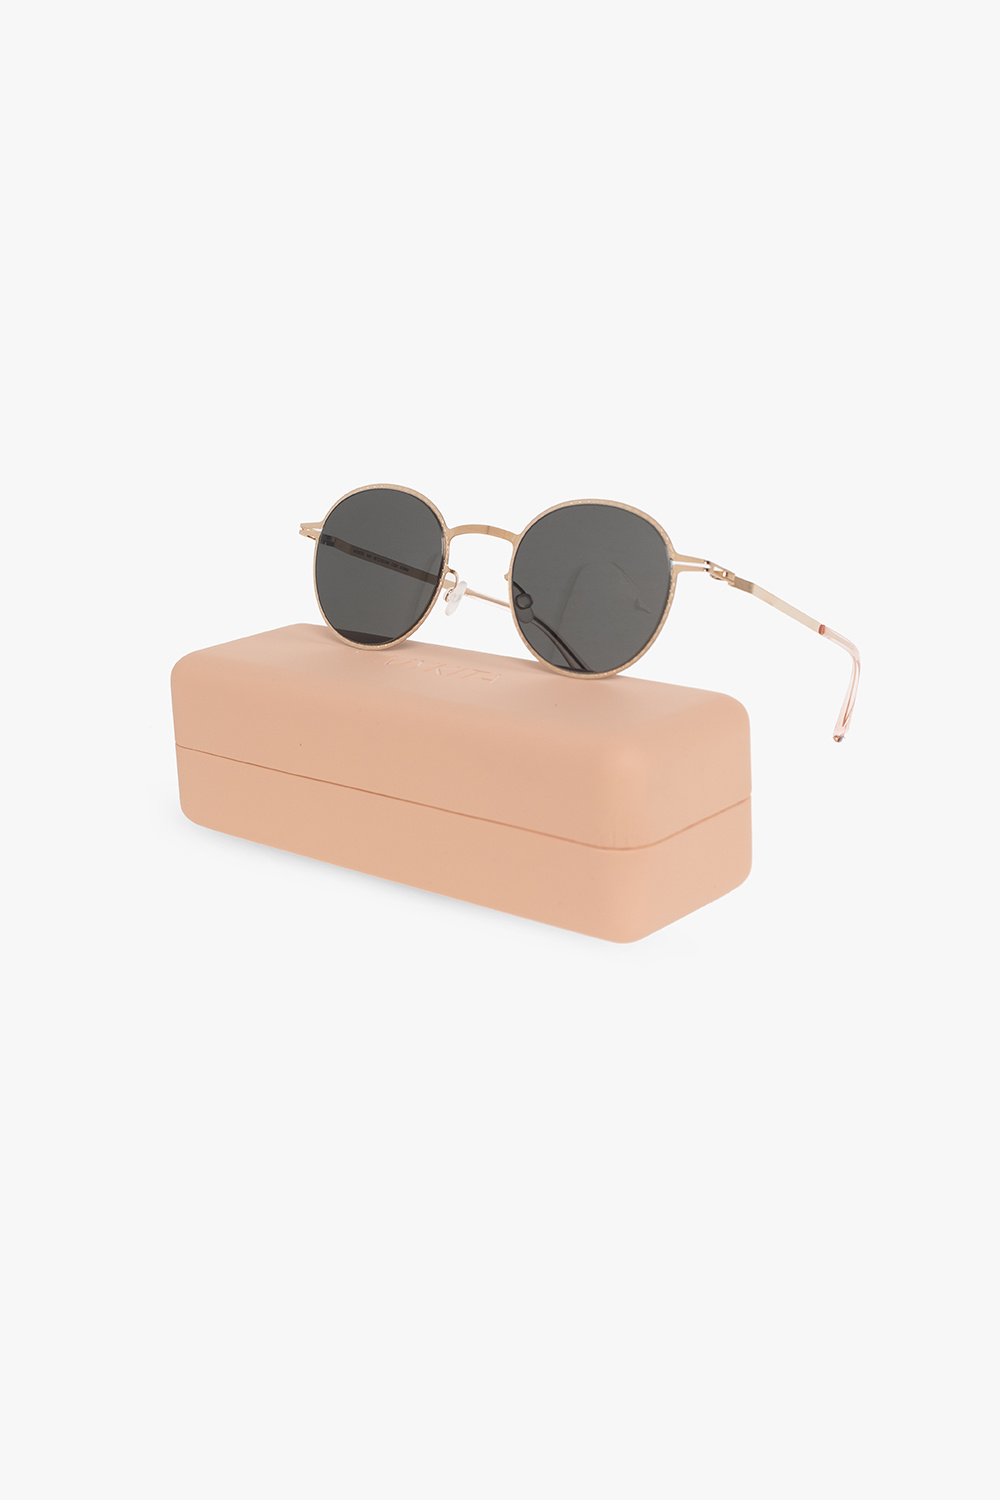 Mykita ‘Nis’ Alliance sunglasses